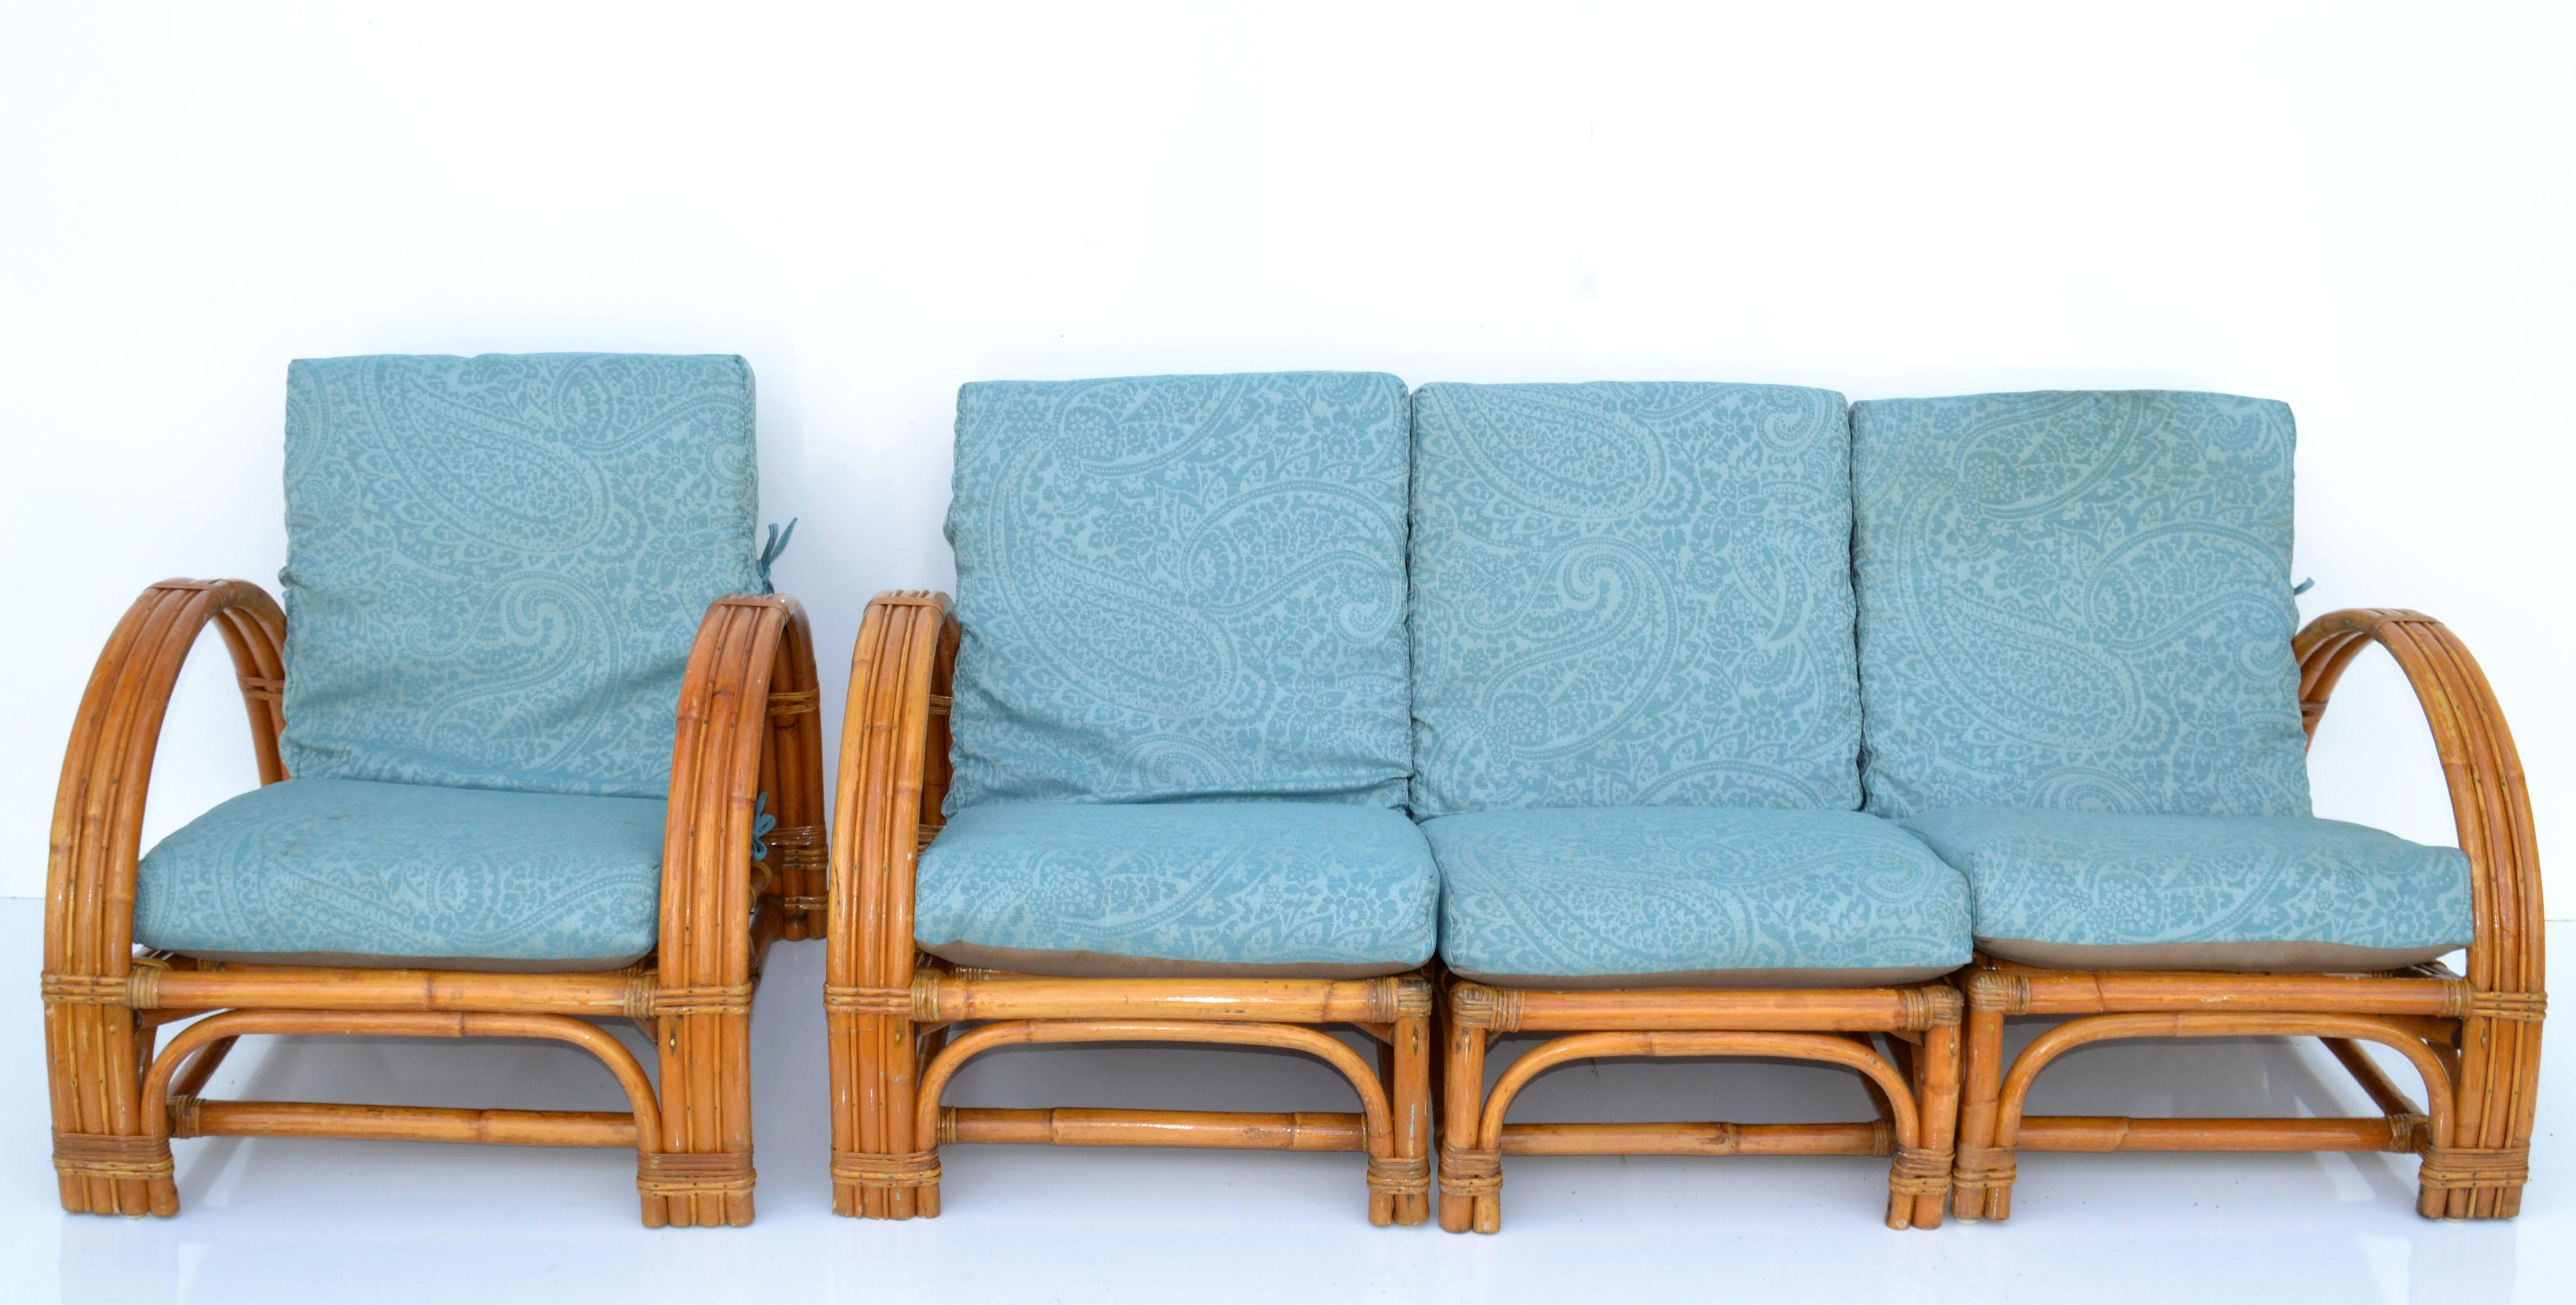 calif-asia bamboo furniture